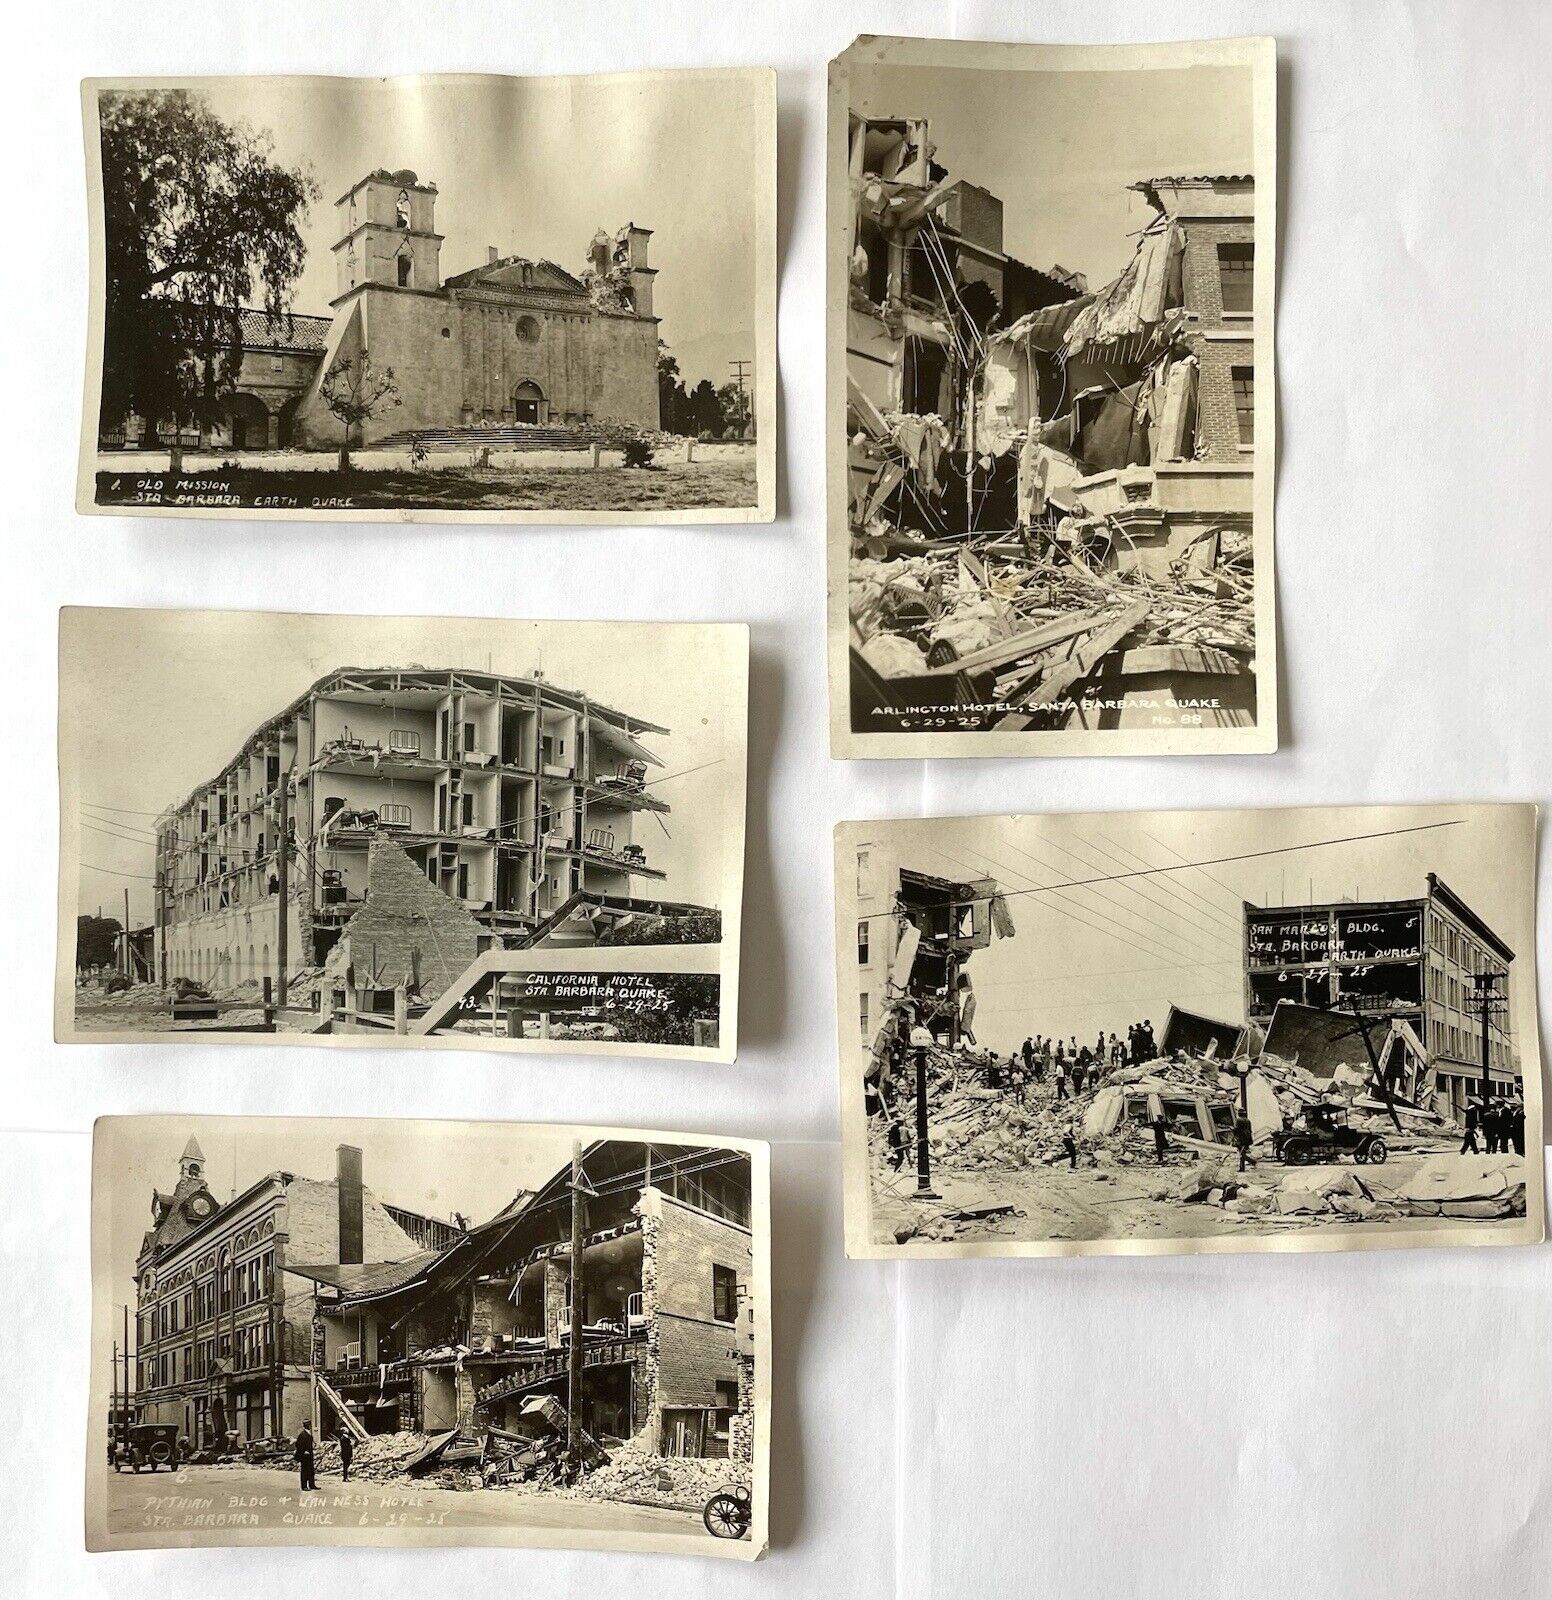 5 Vintage Postcards 1925 Santa Barbara CA Earthquake, Hotels, Mission, Buildings